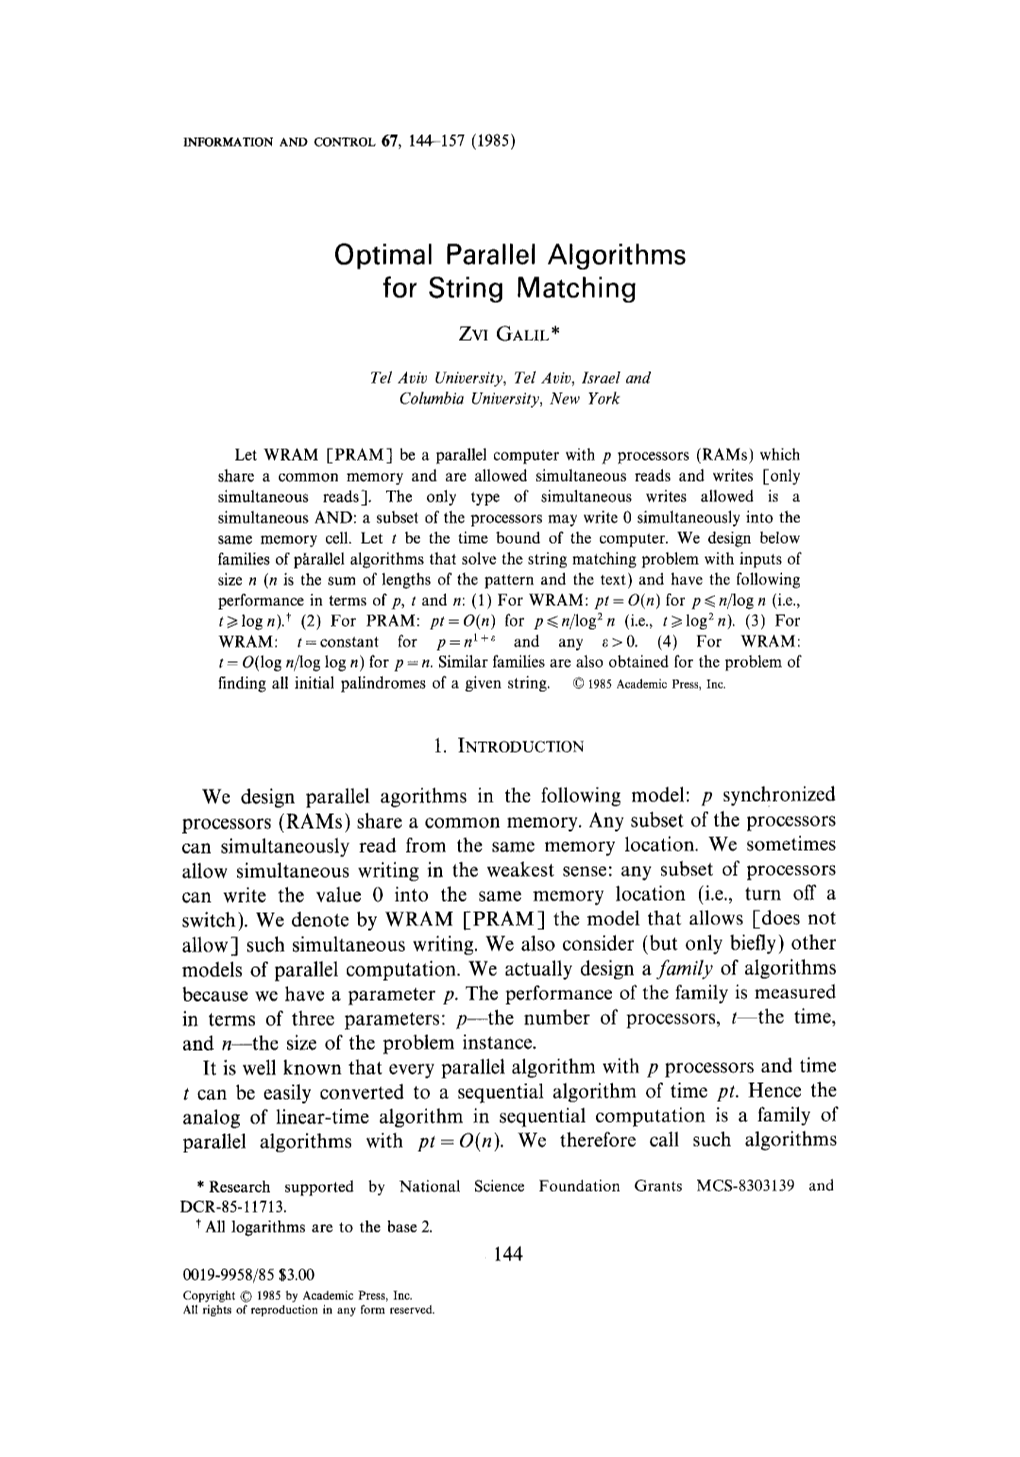 Optimal Parallel Algorithms for String Matching